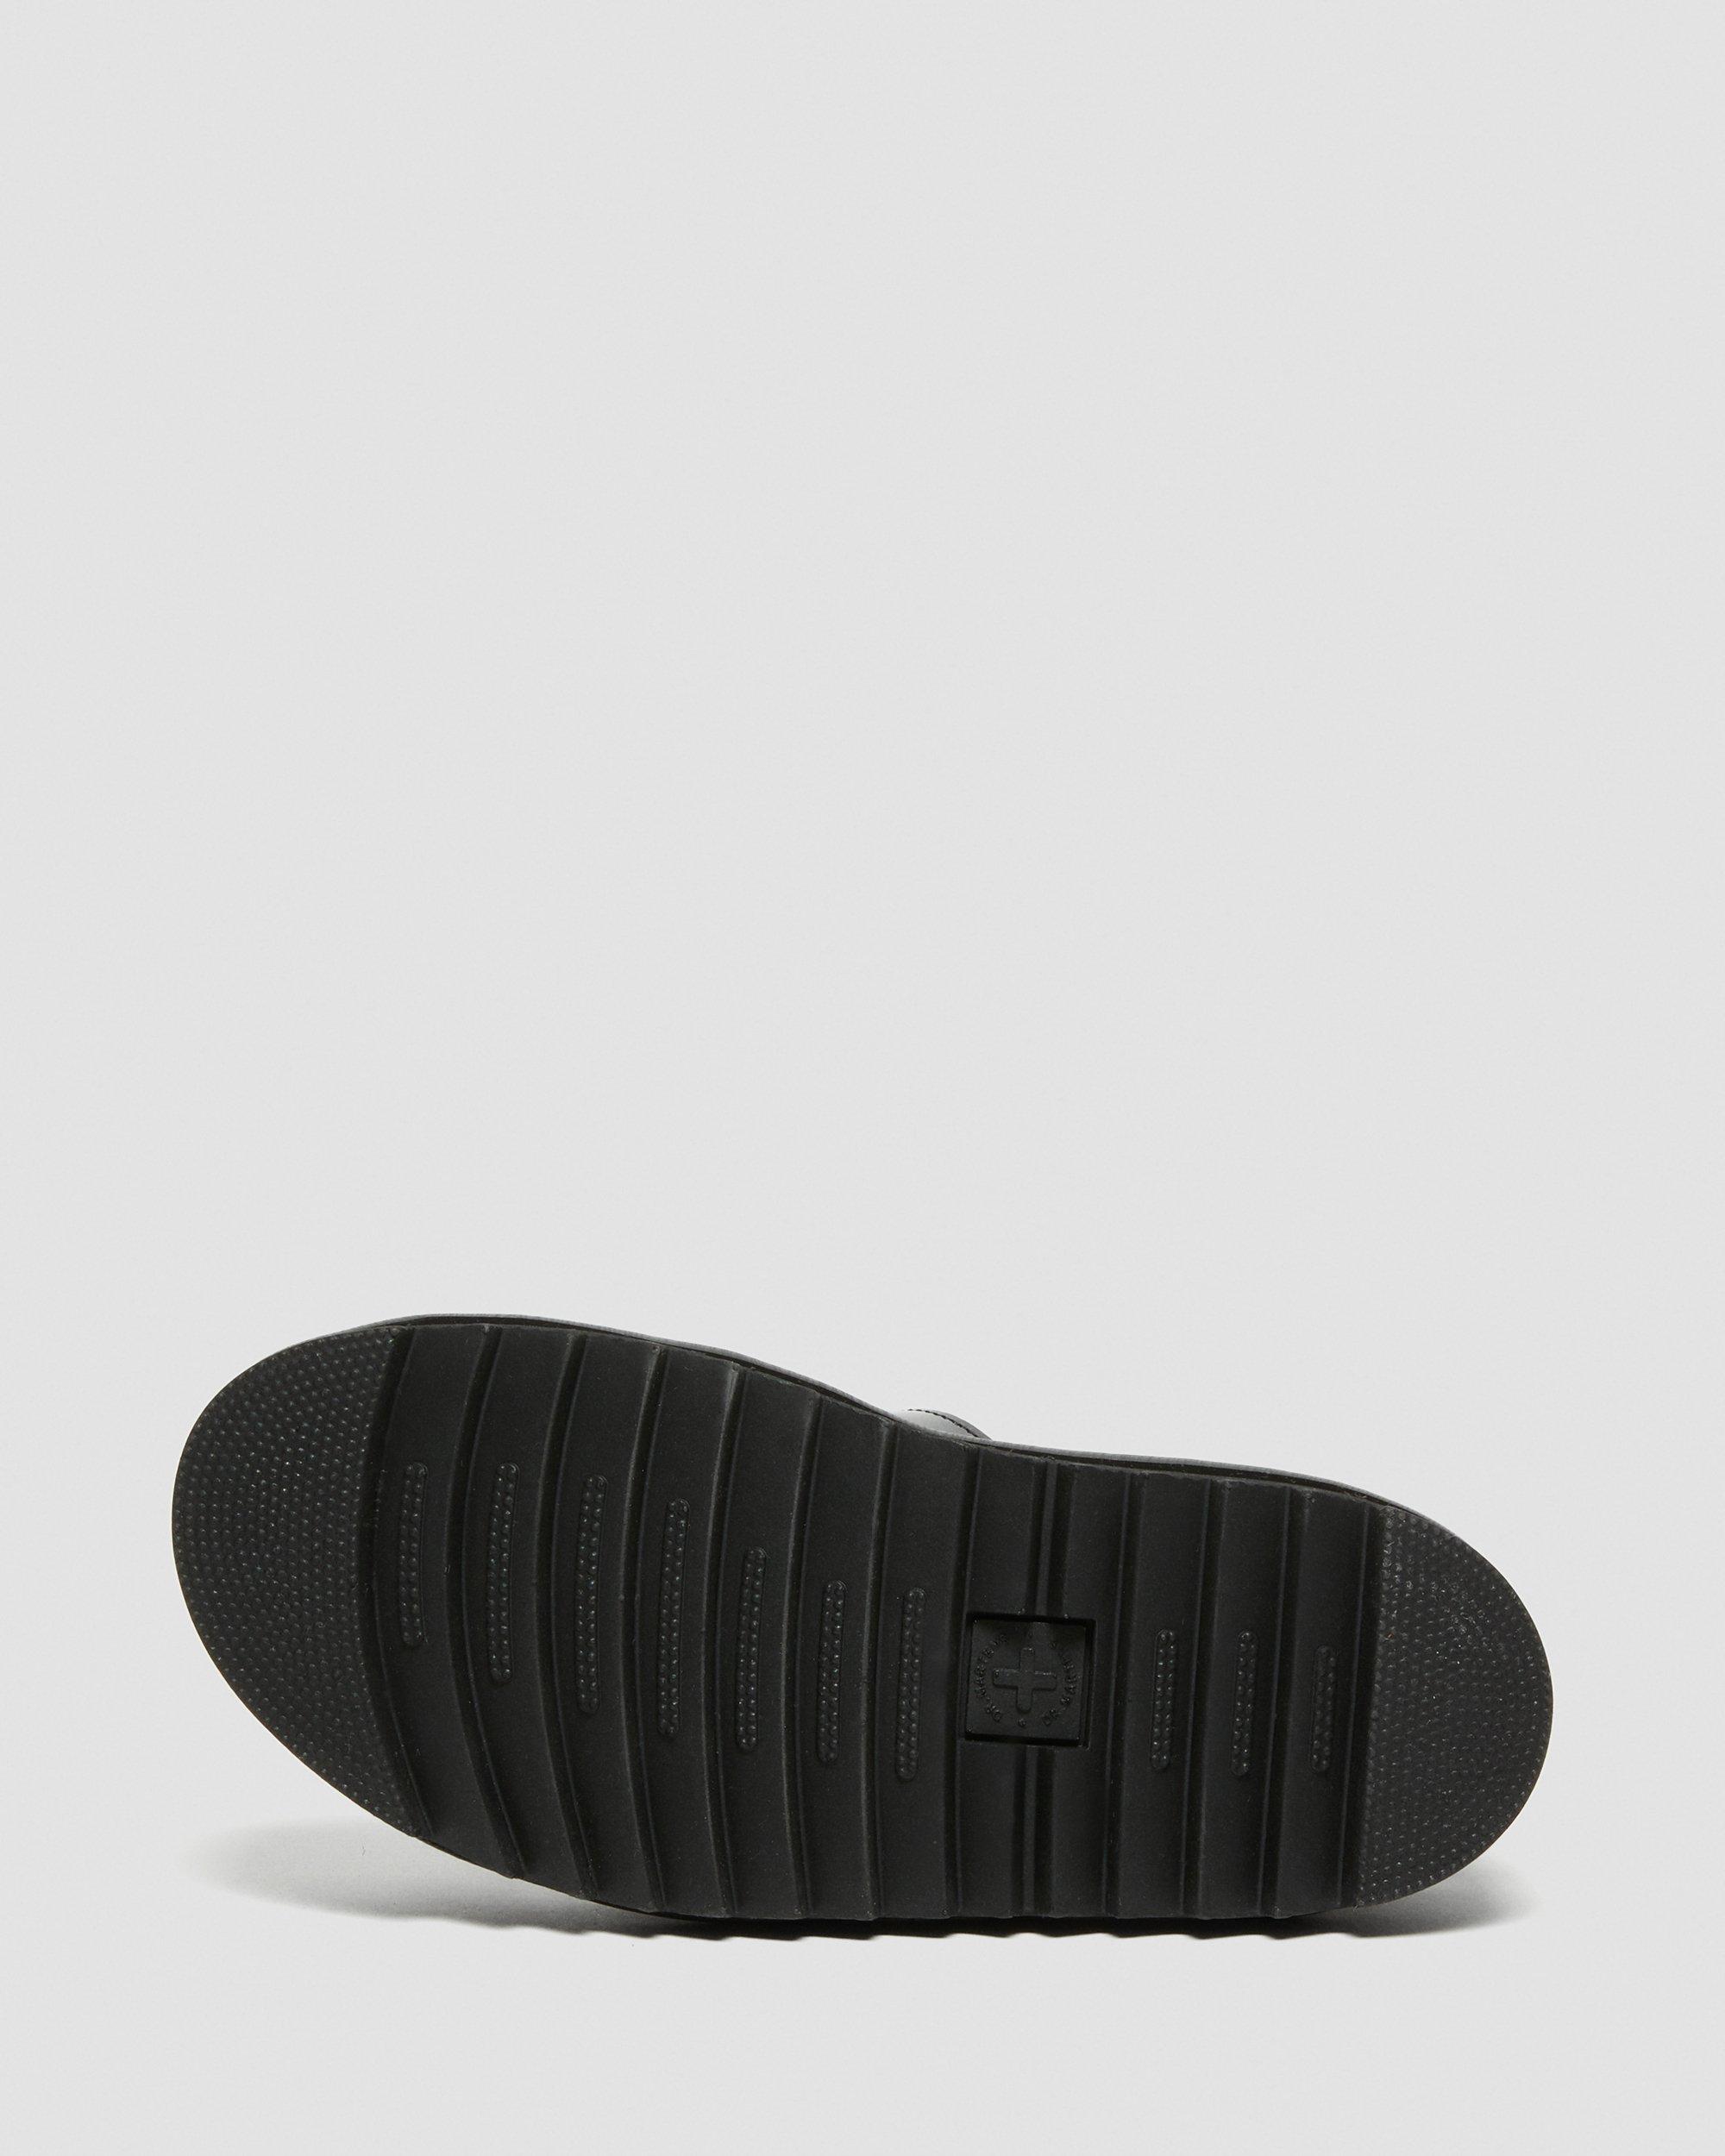 Blaire Patent Leather Strap Sandals in Black | Dr. Martens